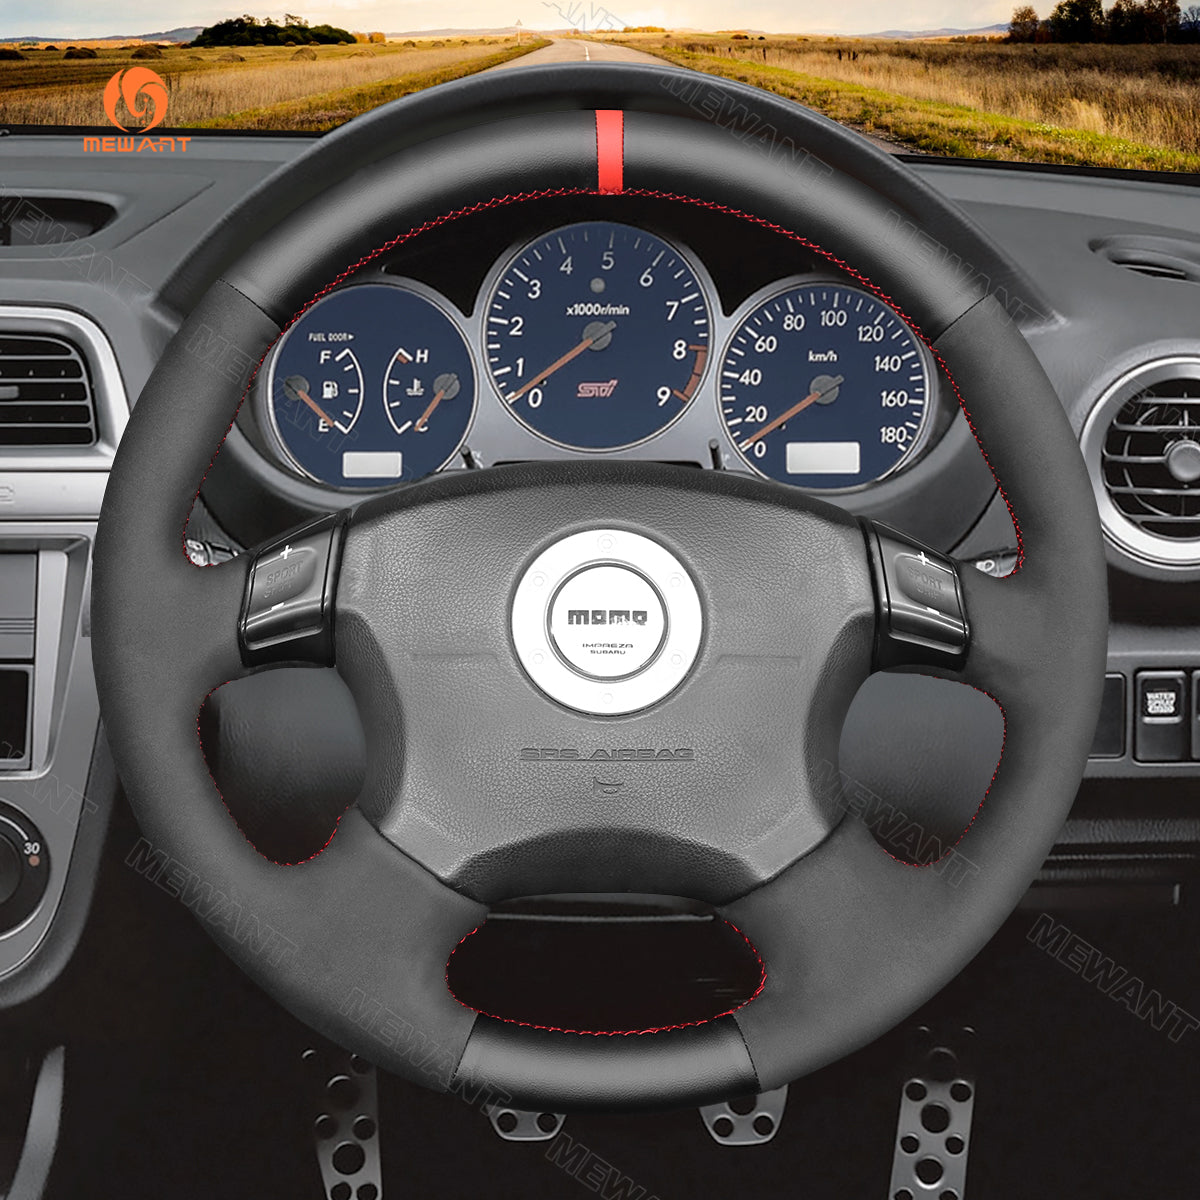 MEWANT Hand Stitch Black Leather Suede Car Steering Wheel Cover for Subaru Impreza WRX 2002-2004